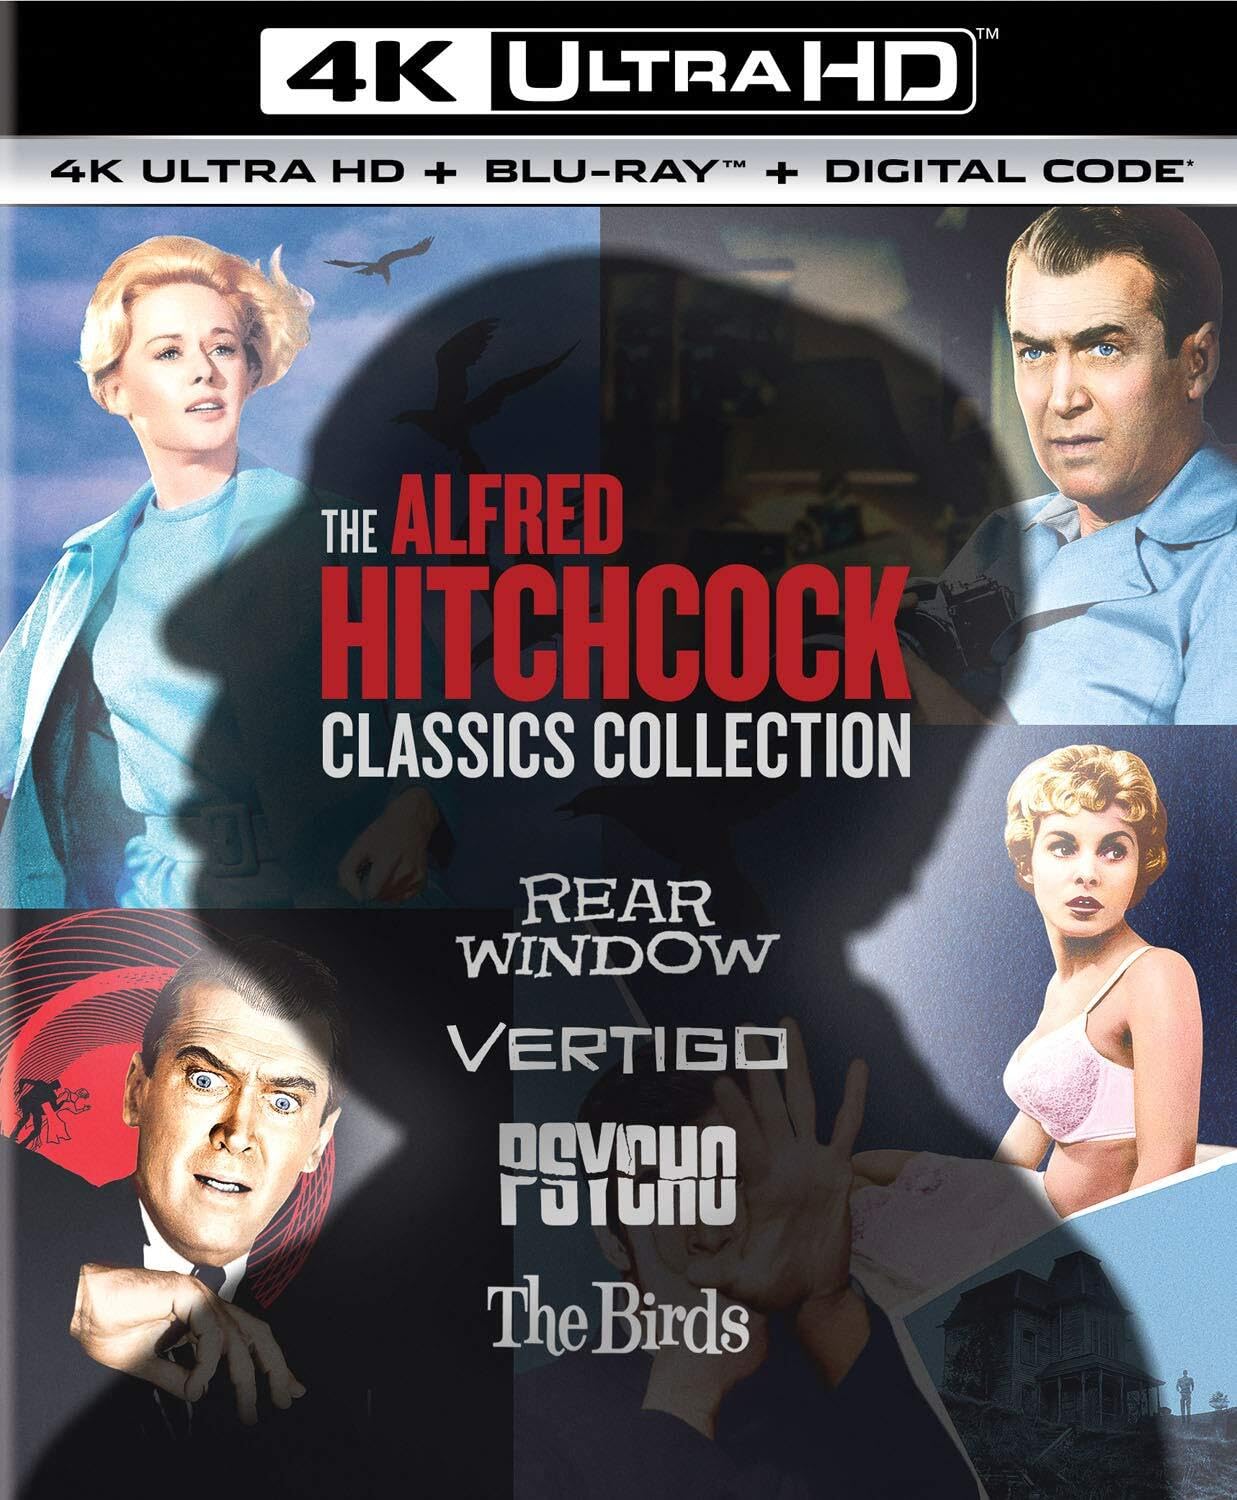 Alfred Hitchcock Classics Collection: Vol 1 (Rear Window/Vertigo/Psycho/The Birds) 4K UHD Code (Movies Anywhere)